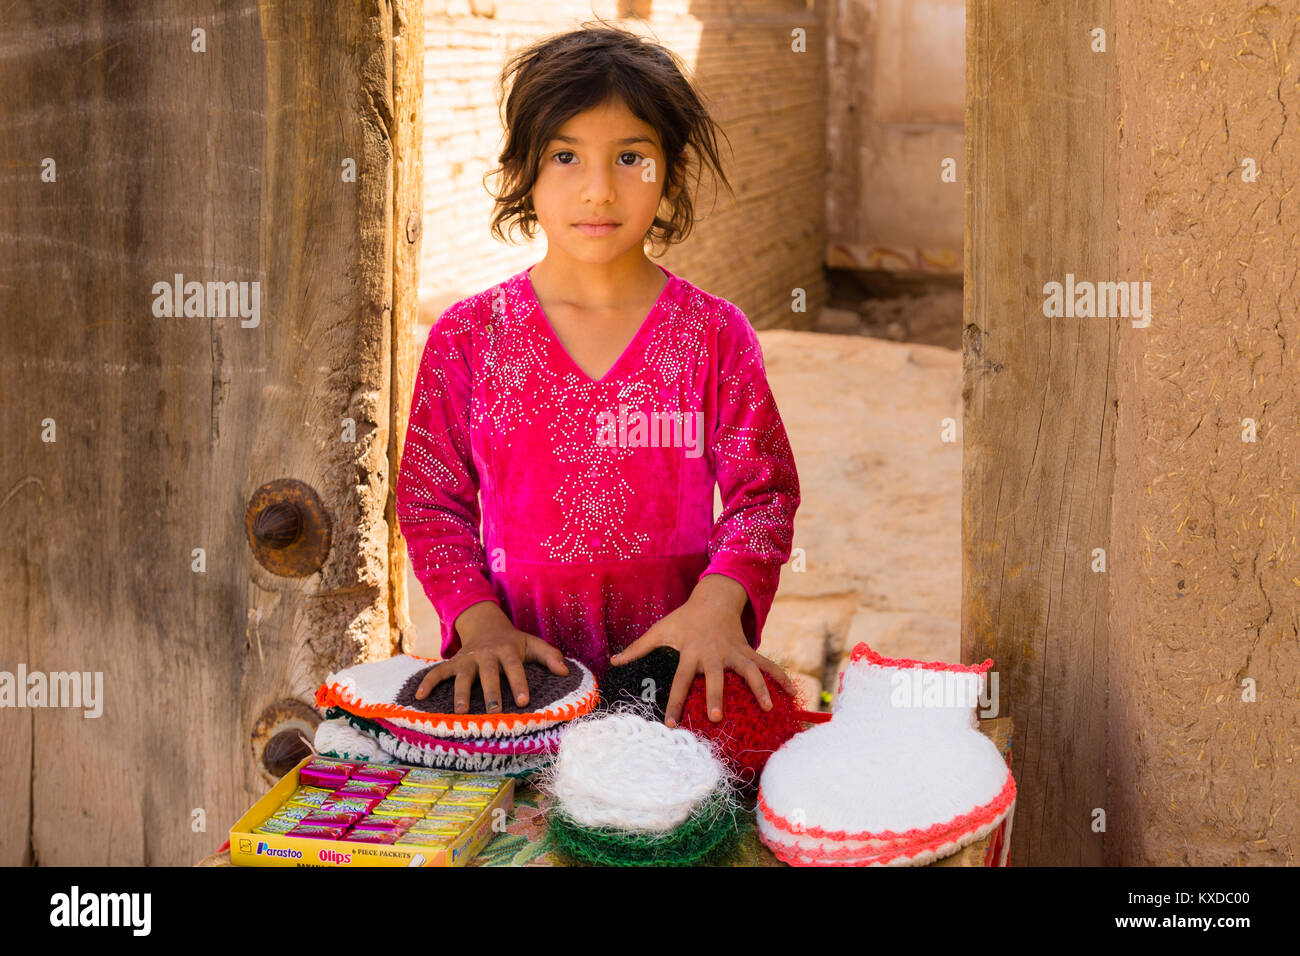 Joven vende mercancías en las calles de Yazd, Irán Foto de stock